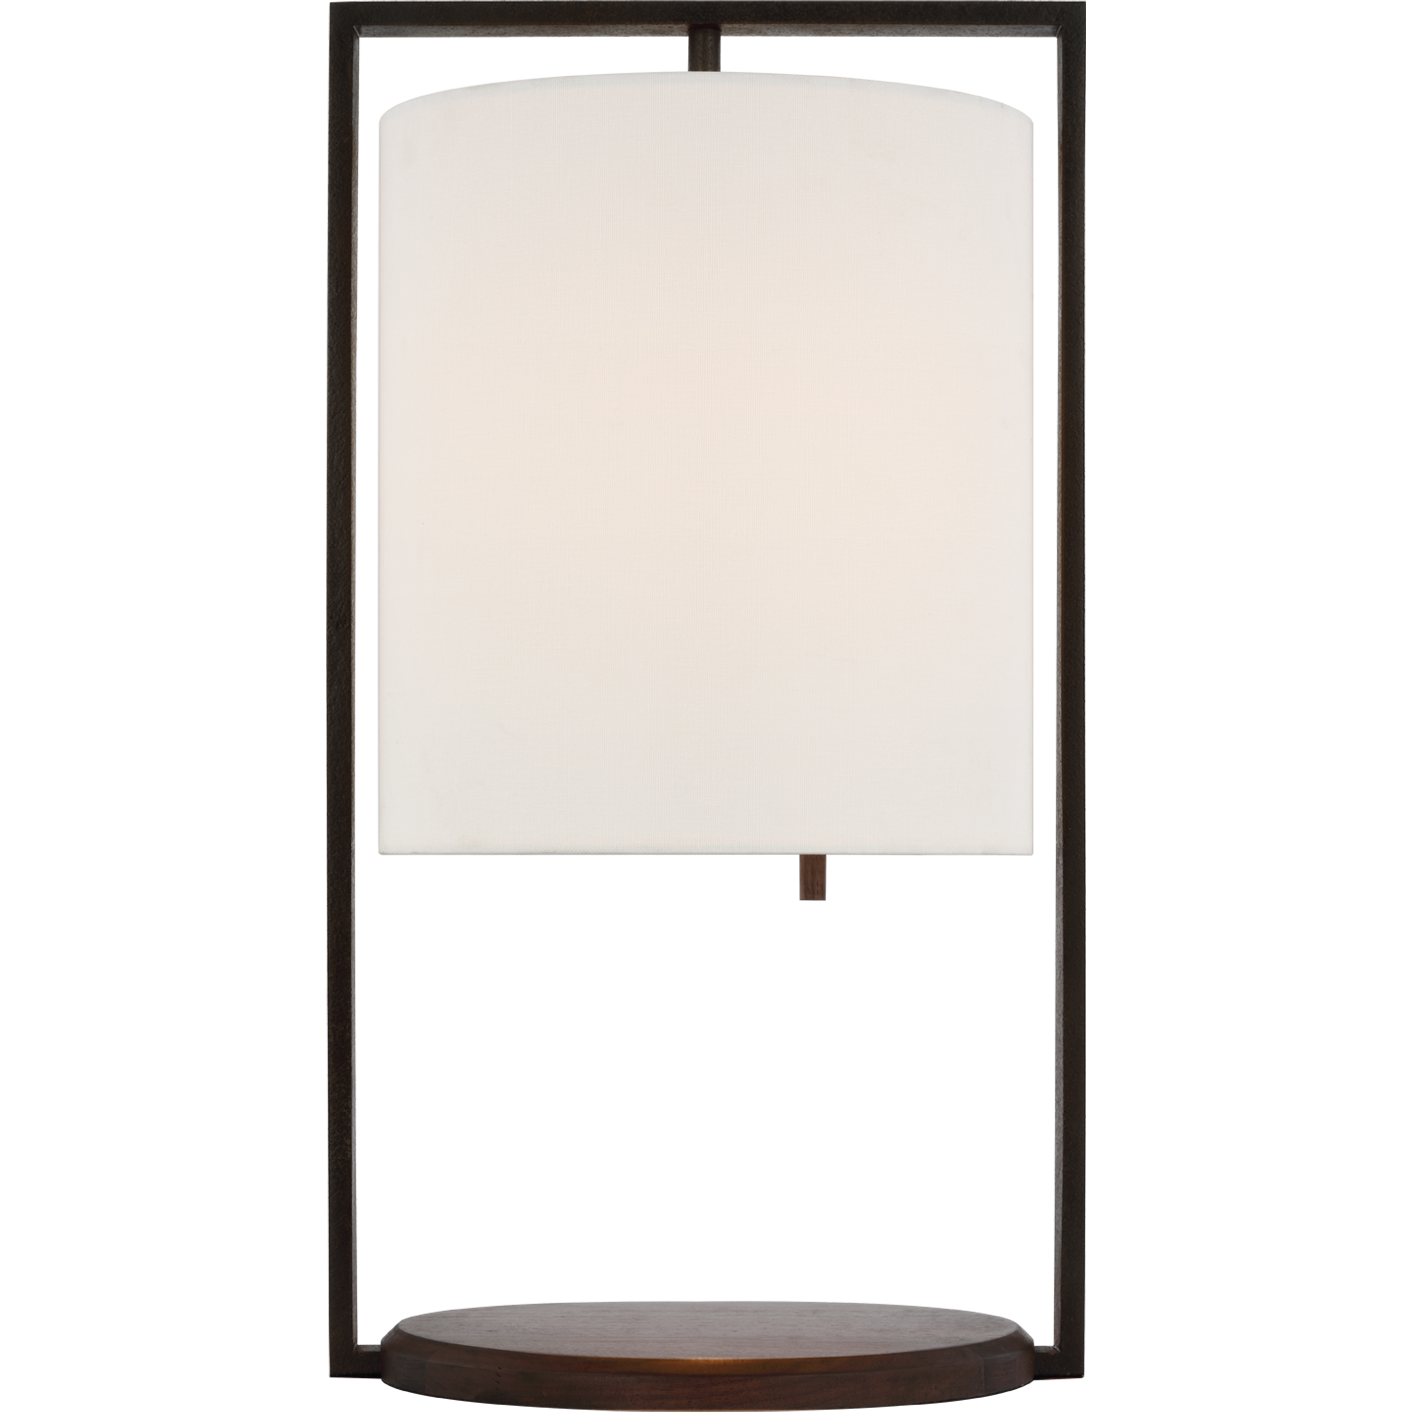 Zenz Medium Table Lamp